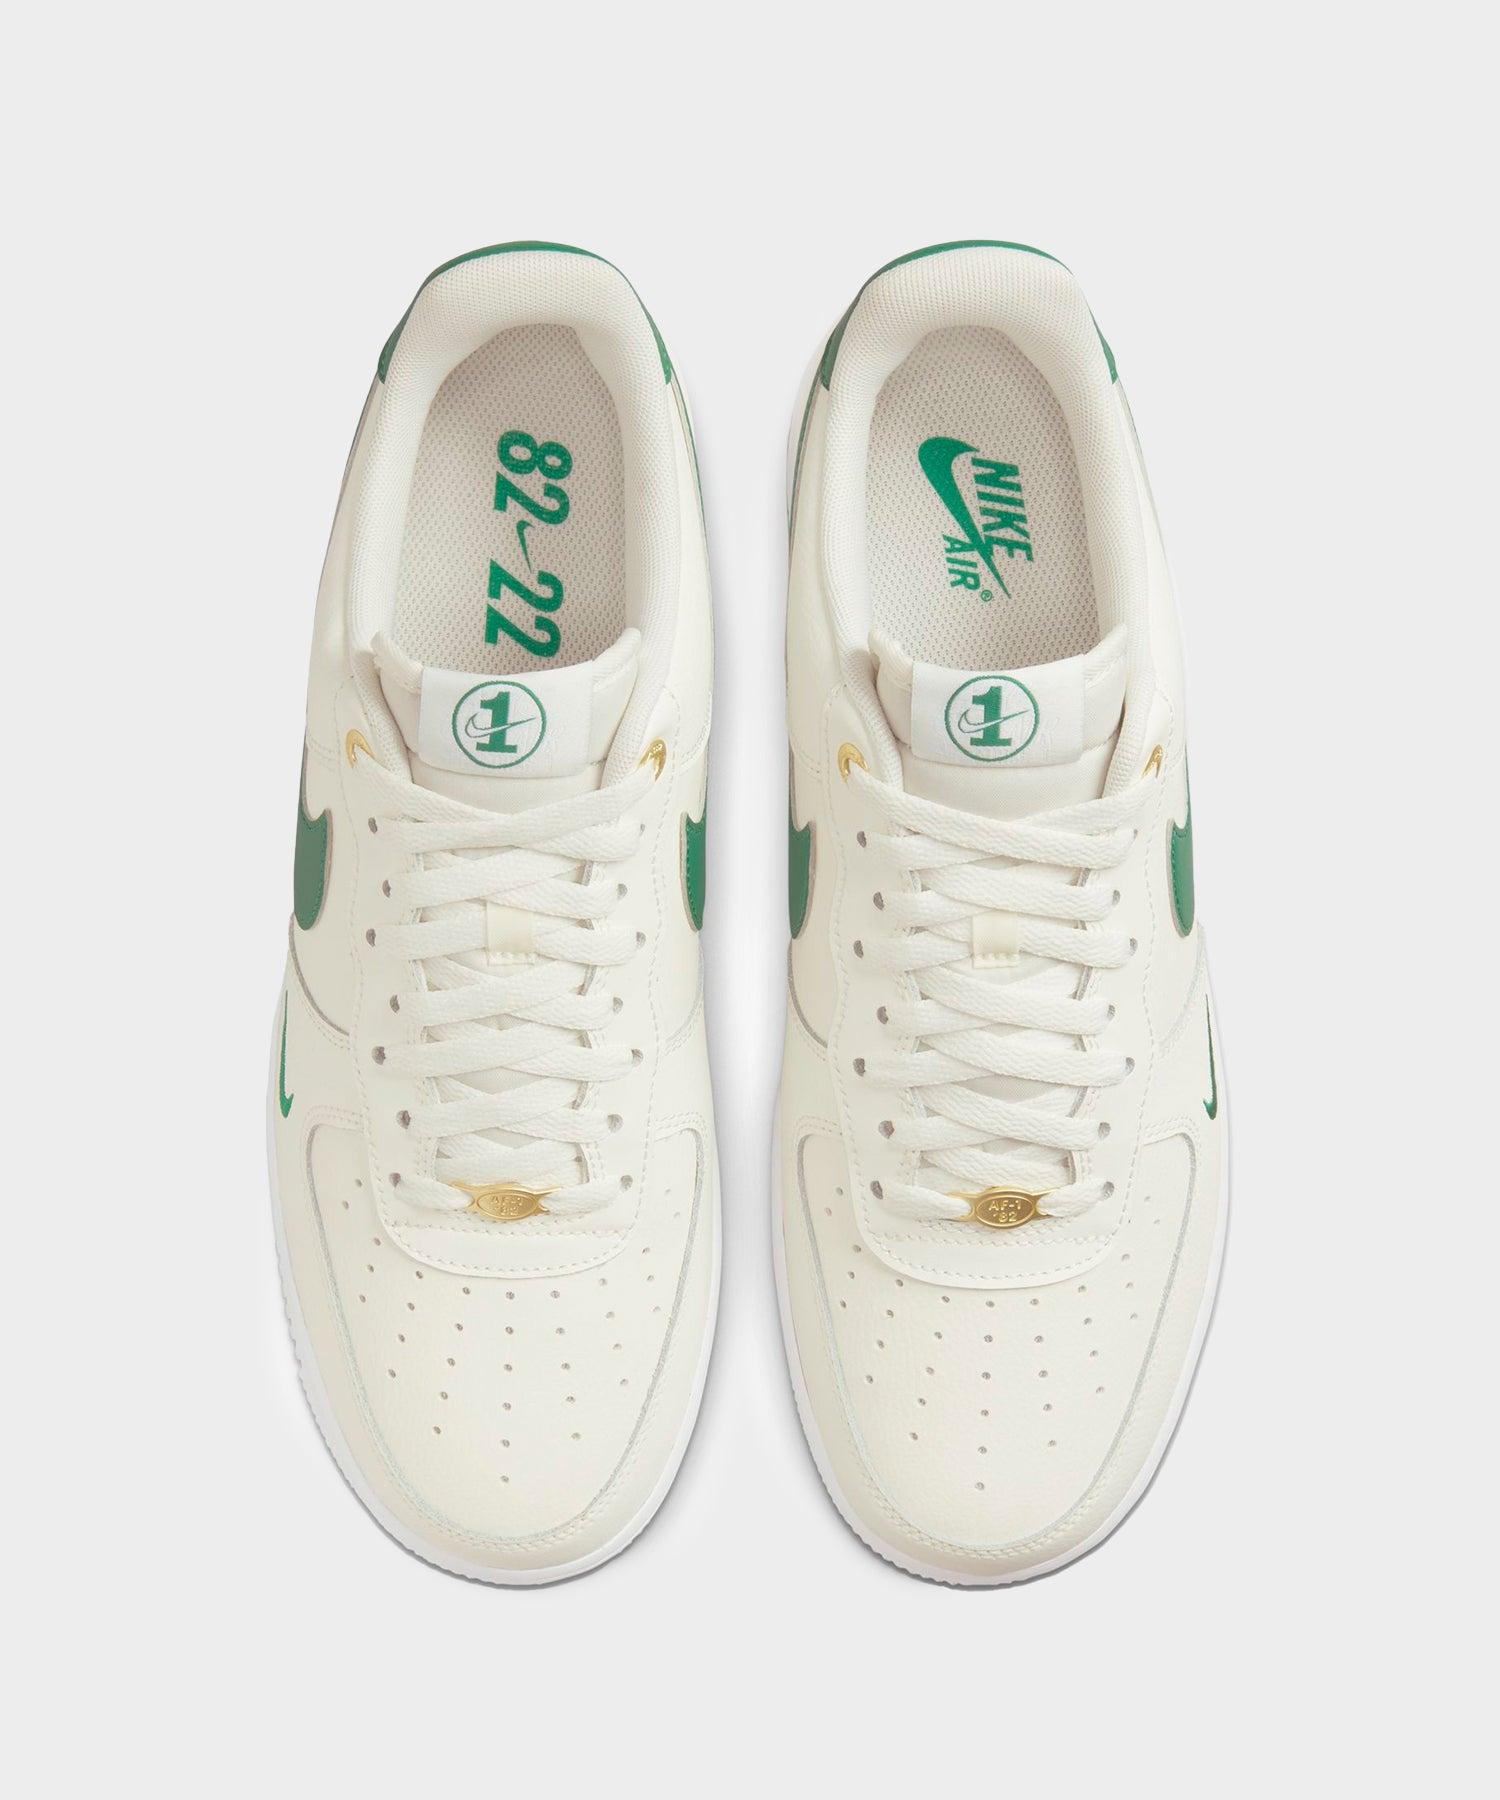 Nike Air Force 1 '07 Lv8 Emb white Malachite Sneakers